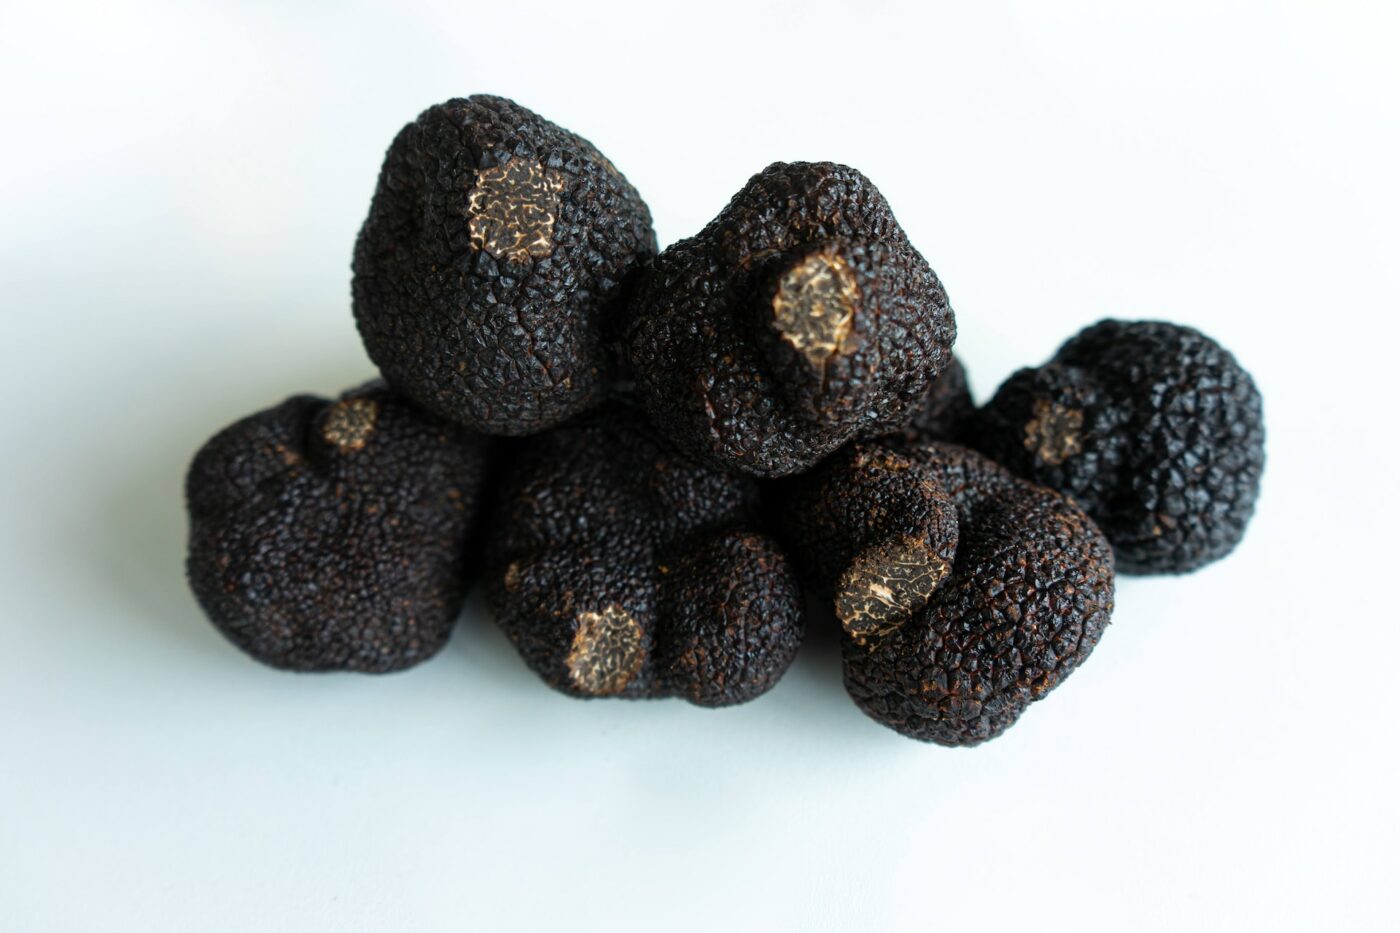 Black truffle